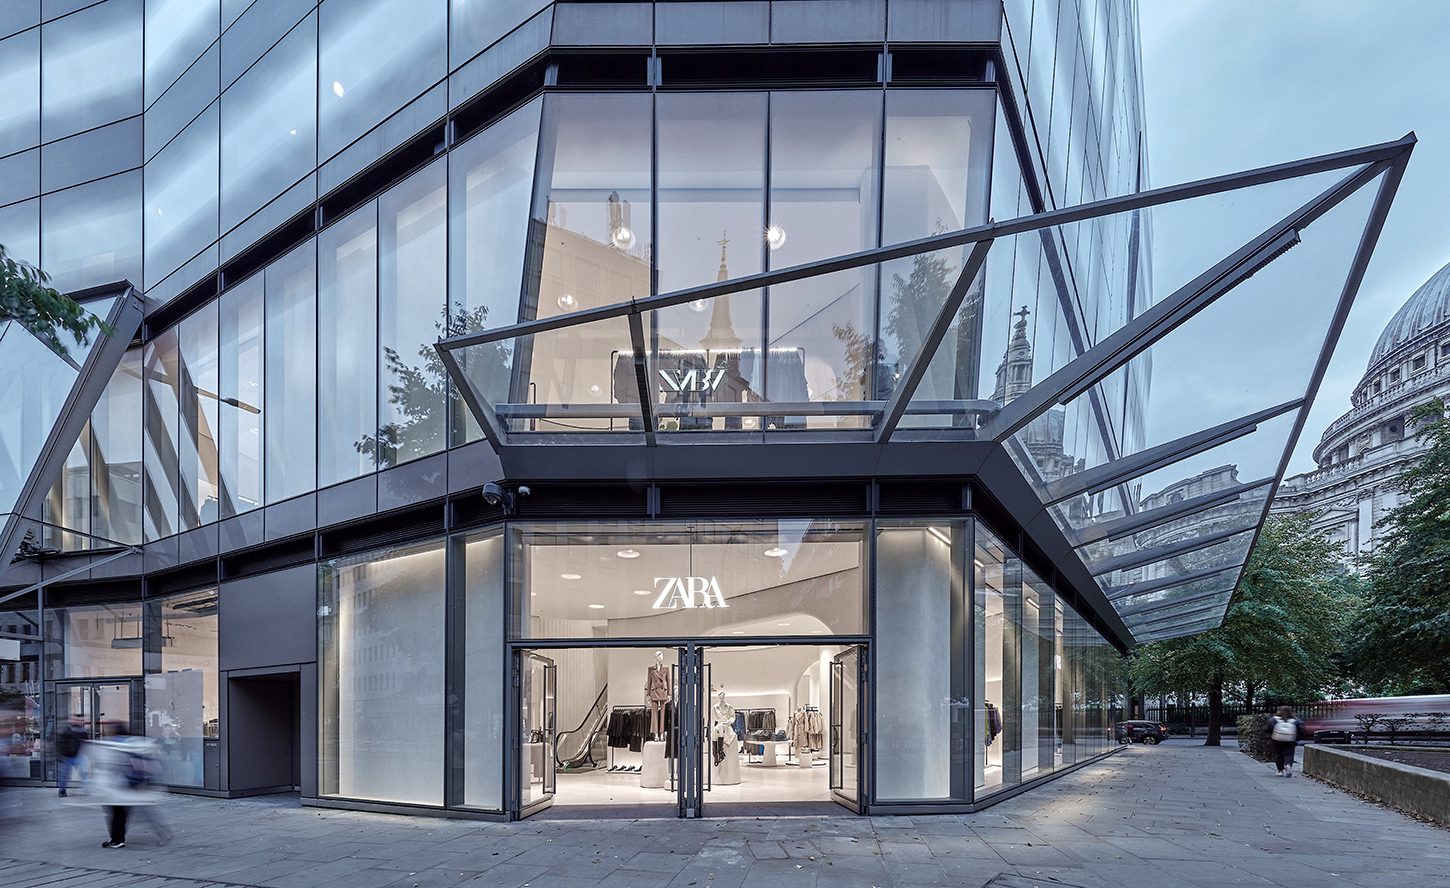 Zara owner accelerates sustainability goals | Retail Sector